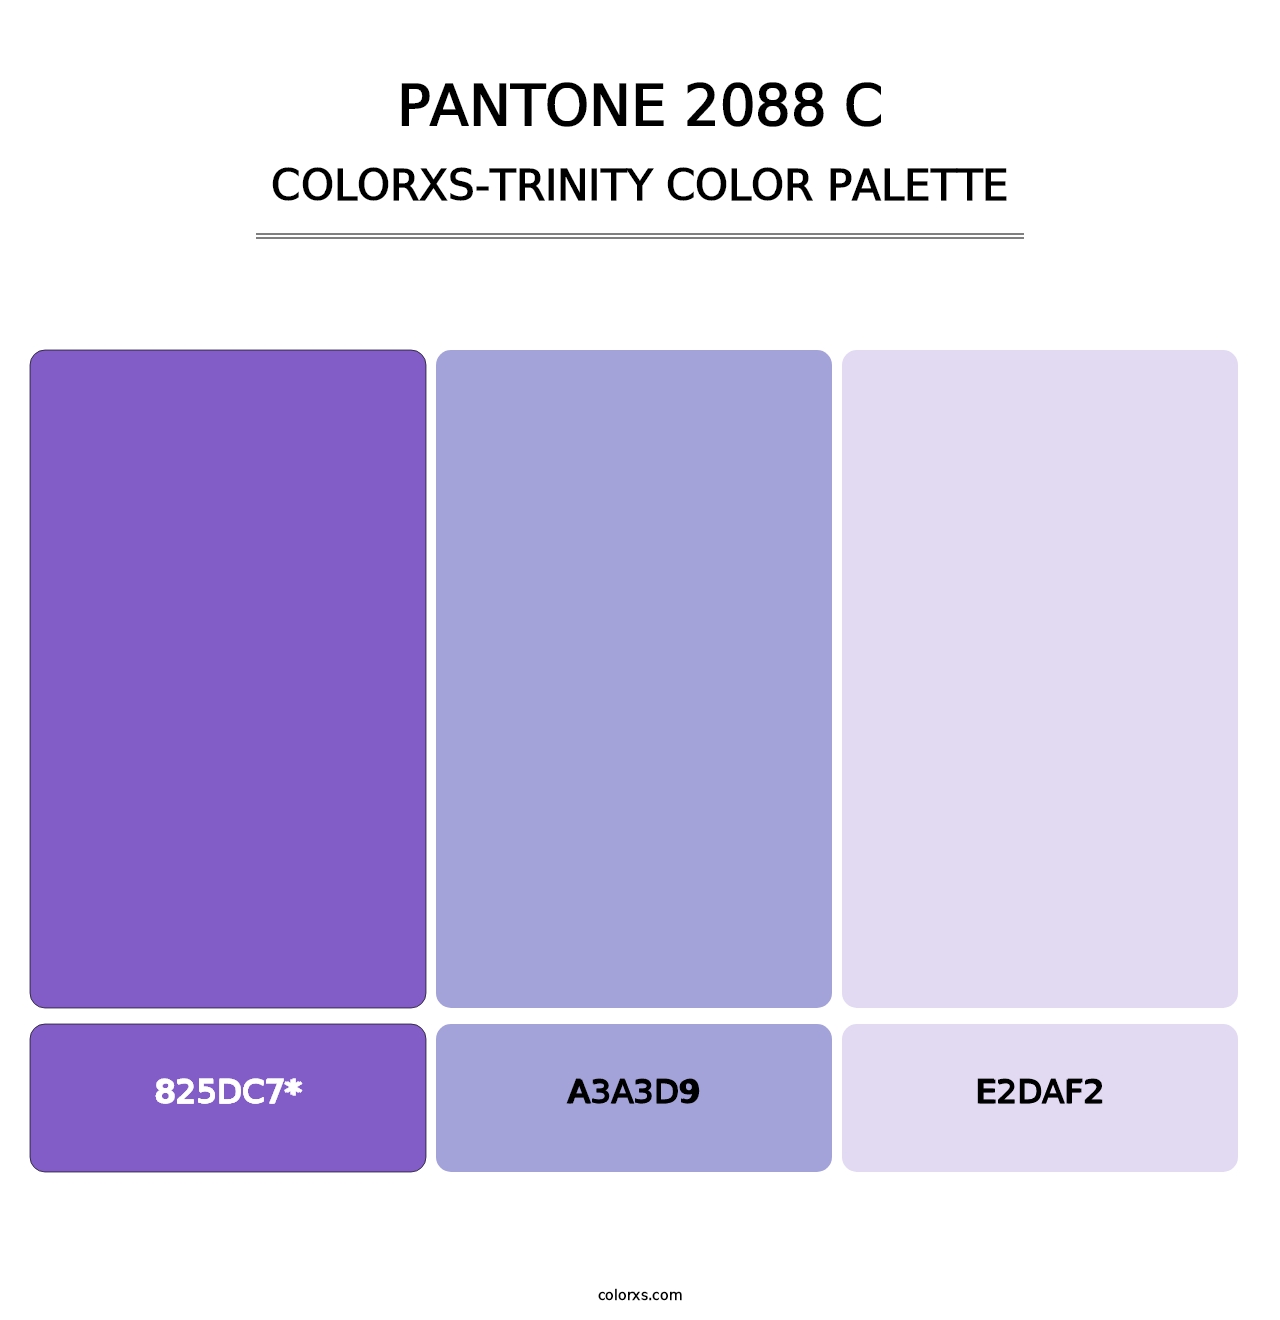 PANTONE 2088 C - Colorxs Trinity Palette